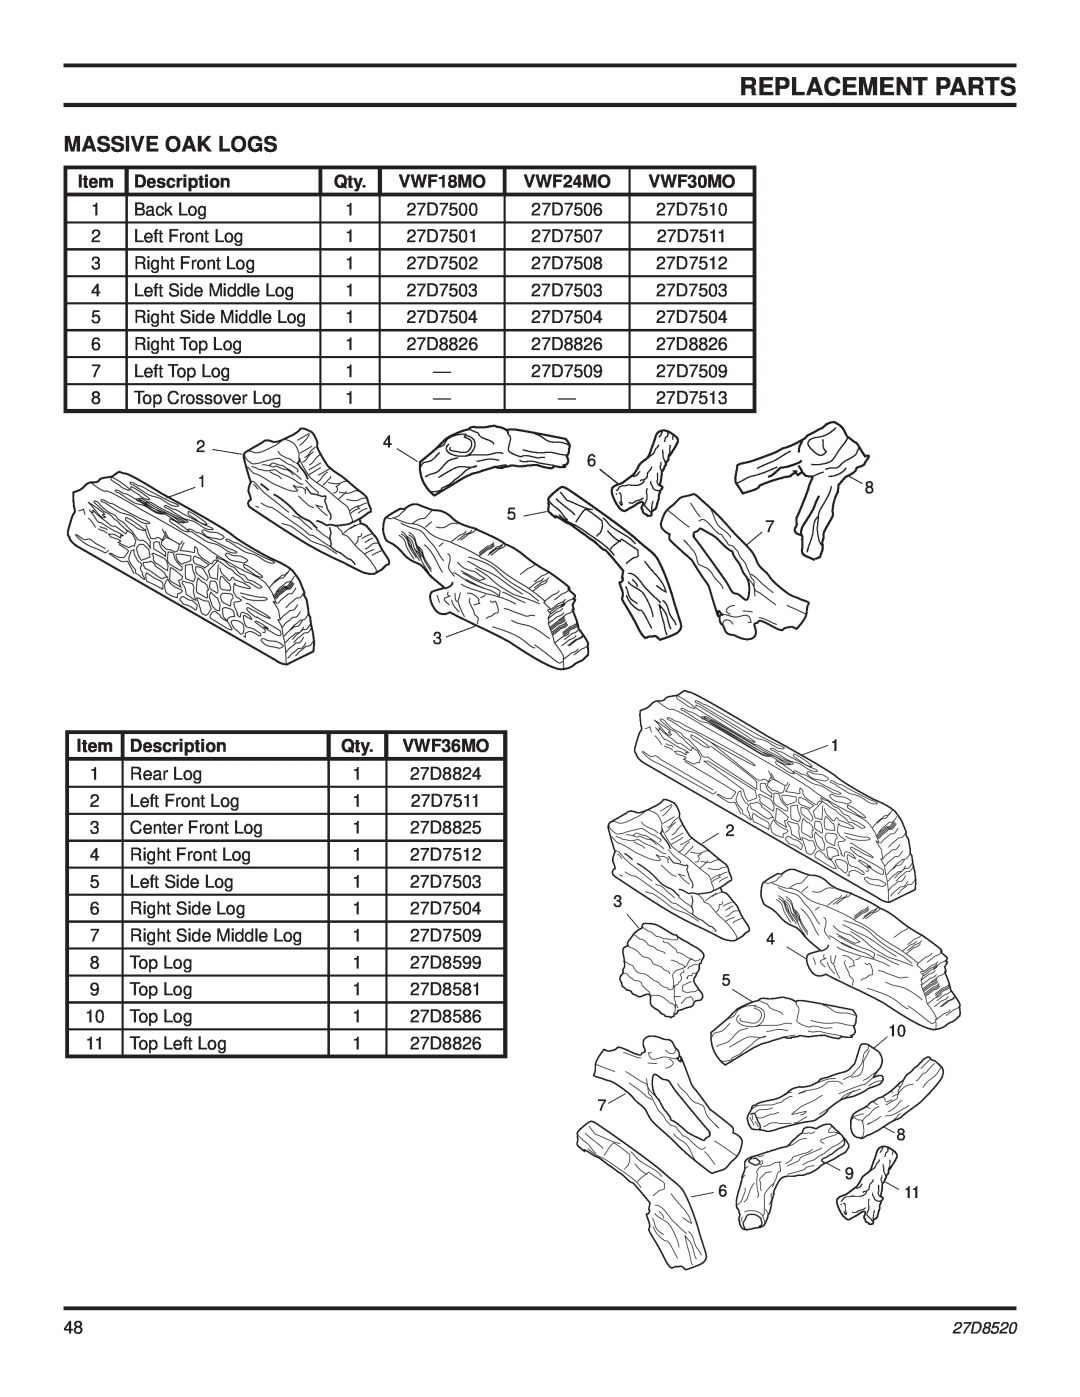 Monessen Hearth manual Massive Oak Logs, Replacement Parts, Description, VWF18MO, VWF24MO, VWF30MO, Item, VWF36MO 